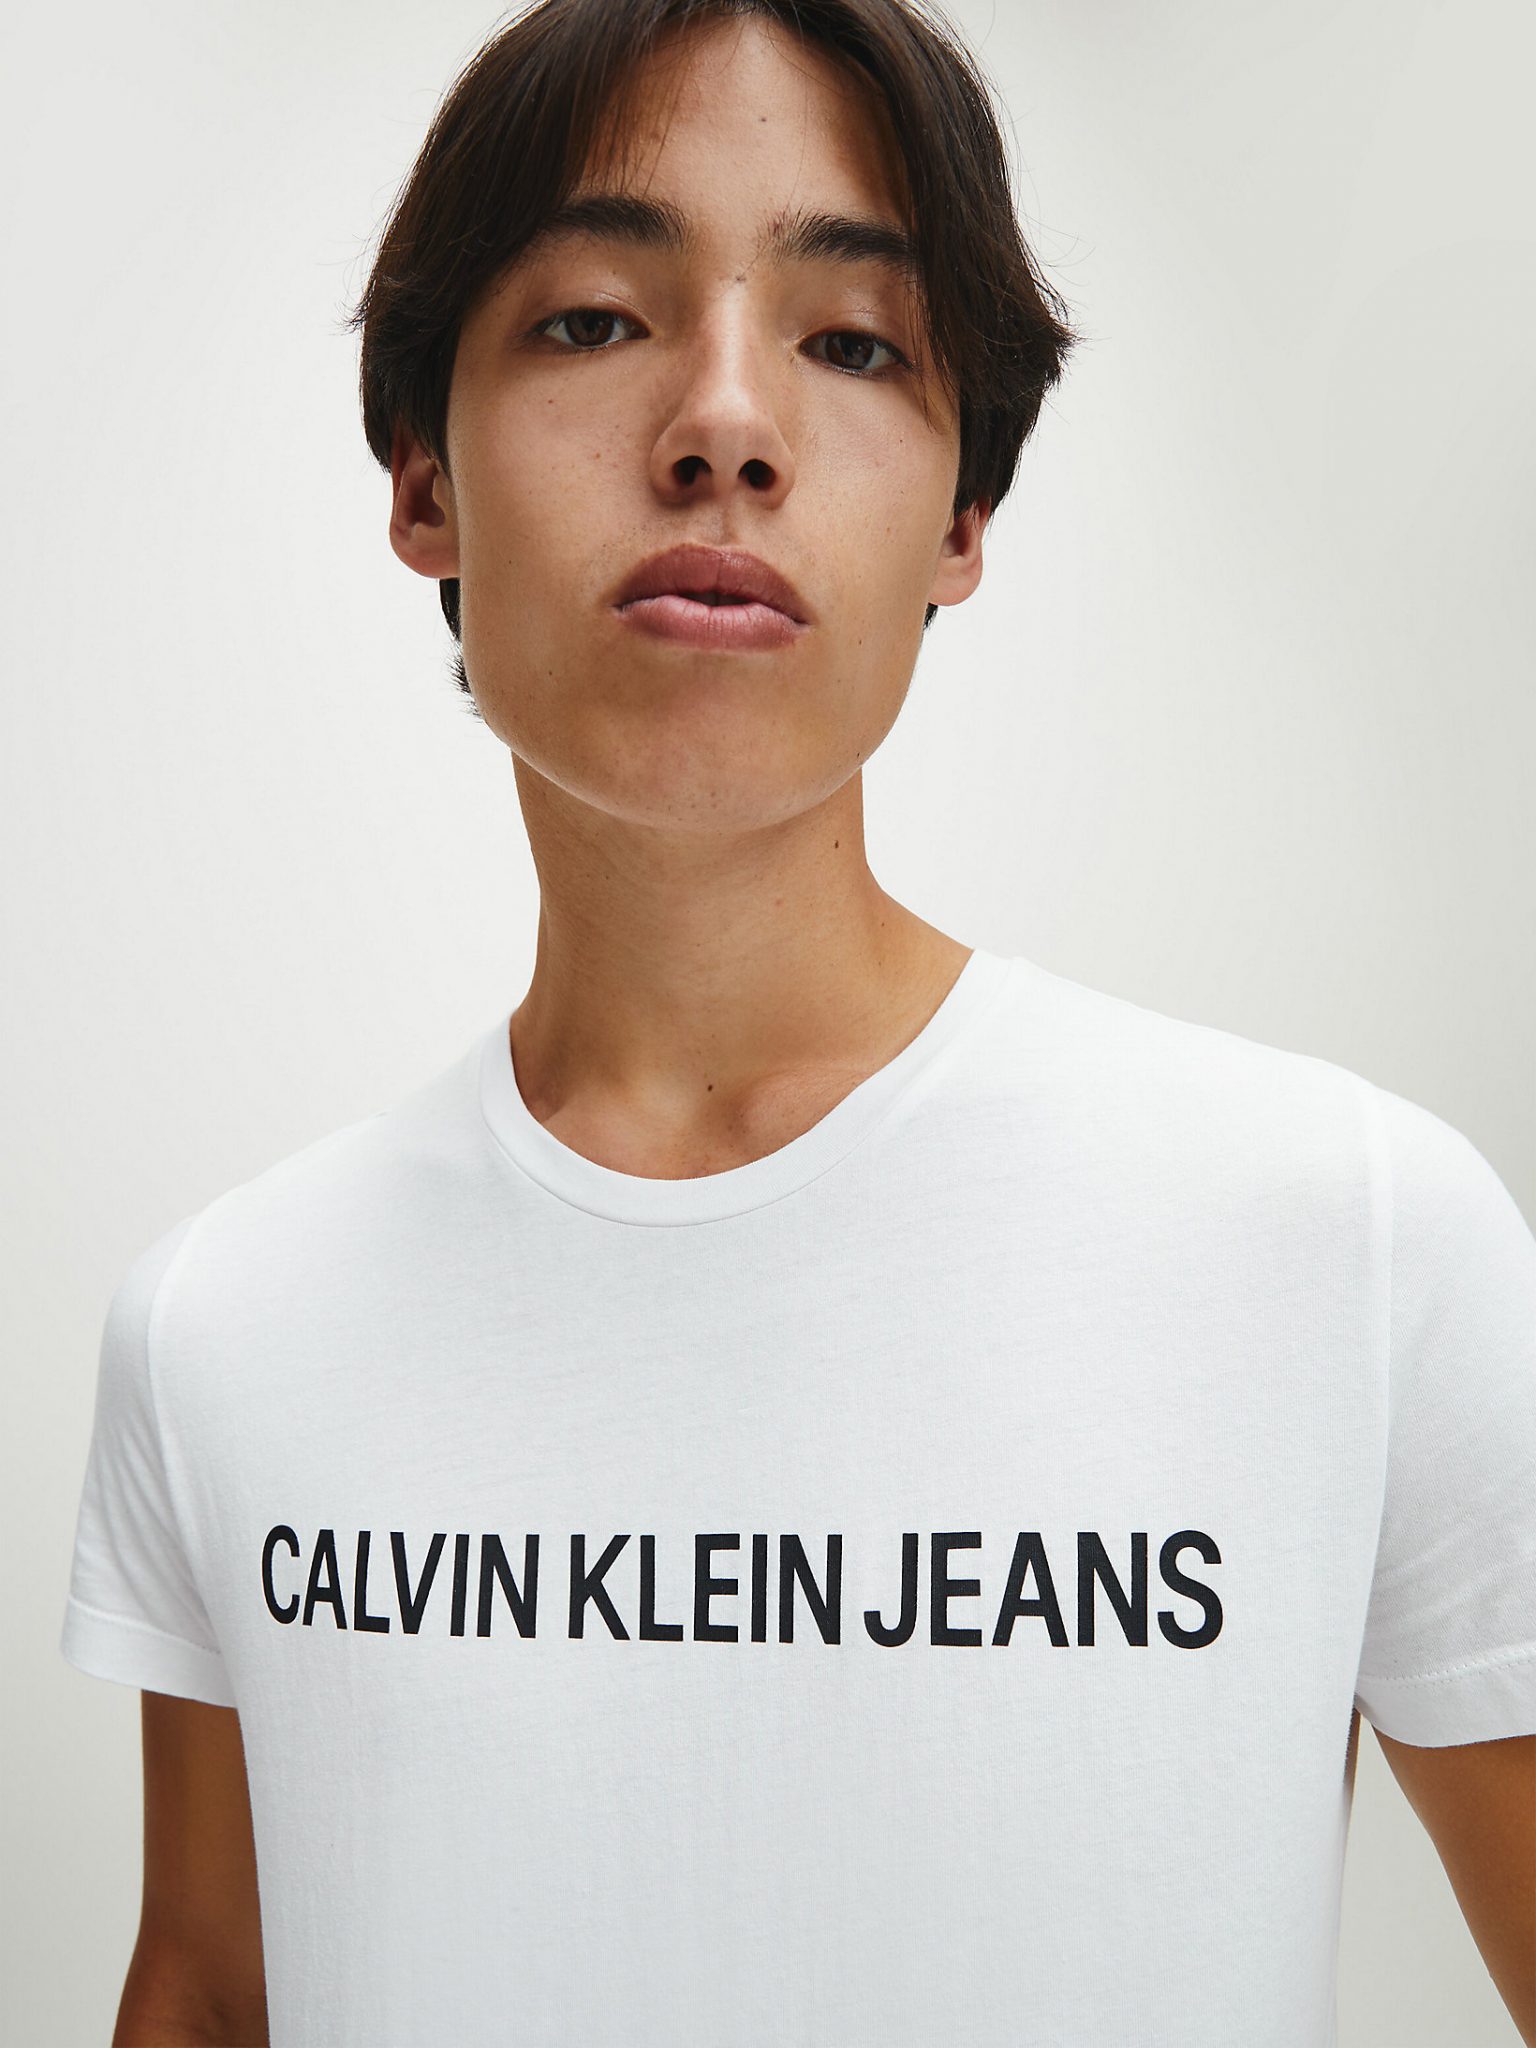 Buy Calvin Klein Scandinavian Institutional Fashion logo Store White T-shirt - Bright